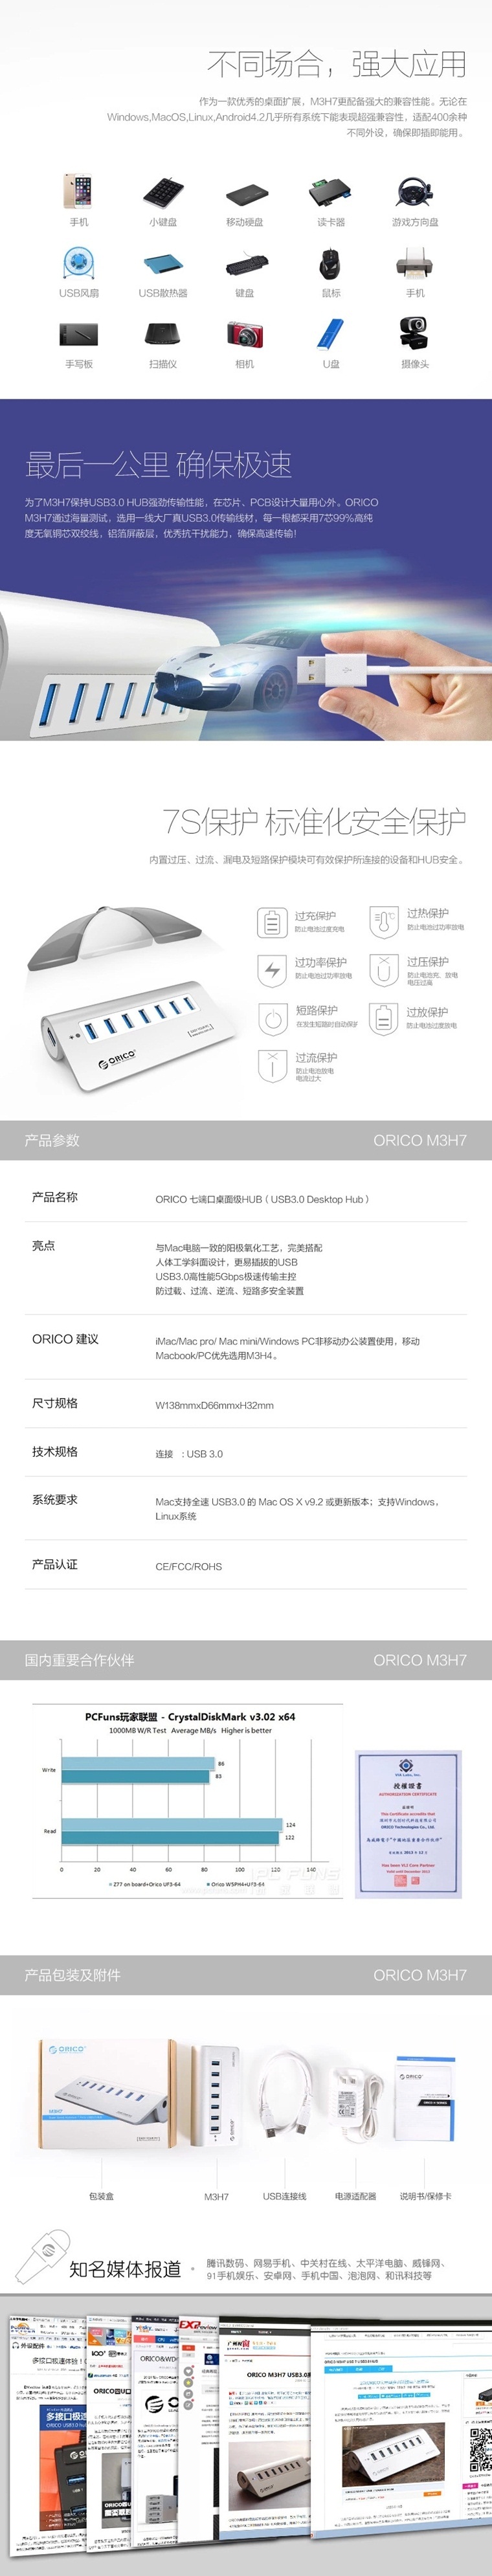 ORICO奥睿科 M3H7 7口MAC BOOK高速USB HUB集线器 usb3.0分线器 带电源